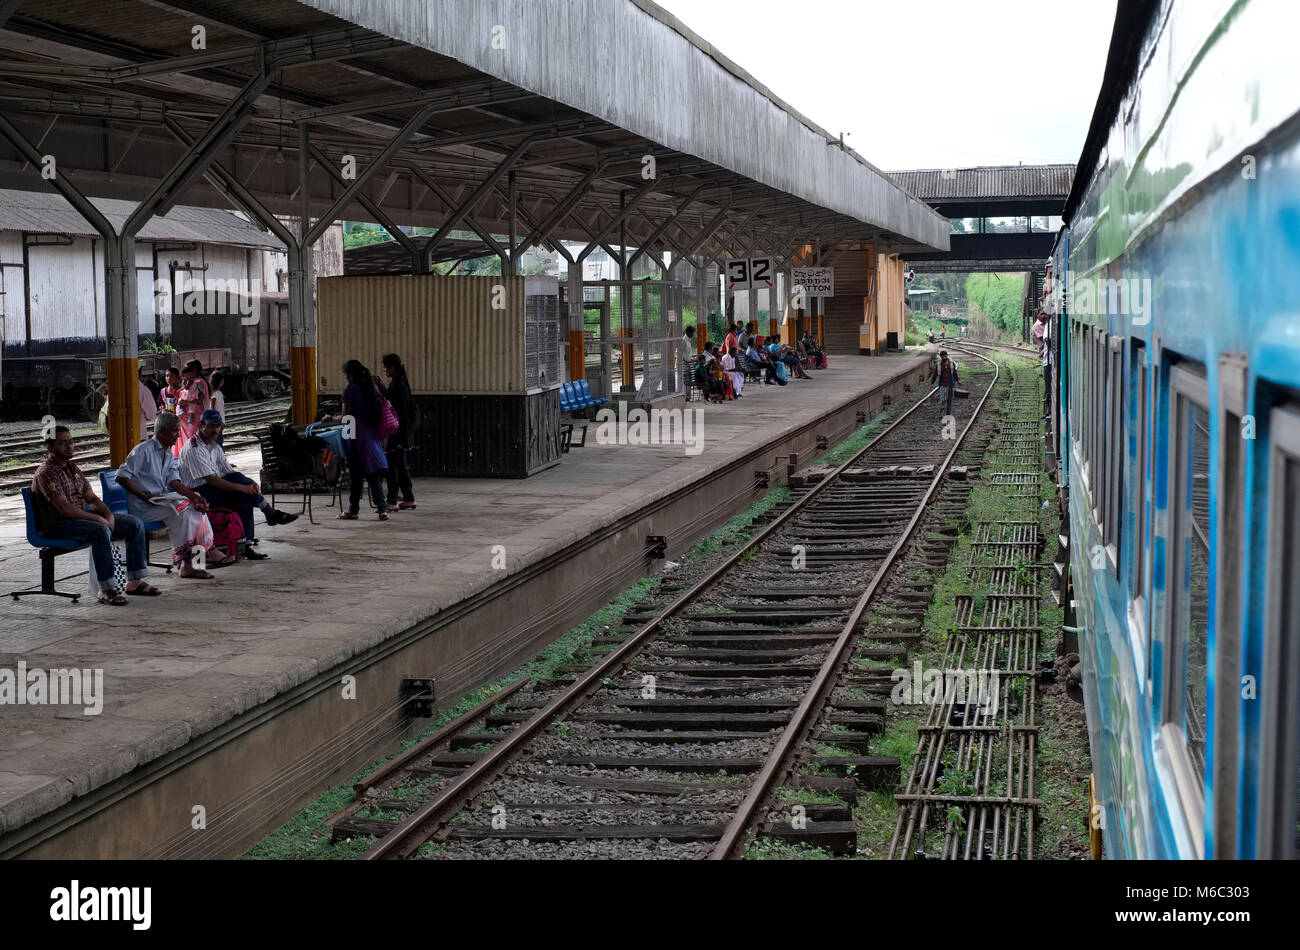 People wait on the railway platform at Hatton station in the Badulla district of Sri Lanka Stock Photo